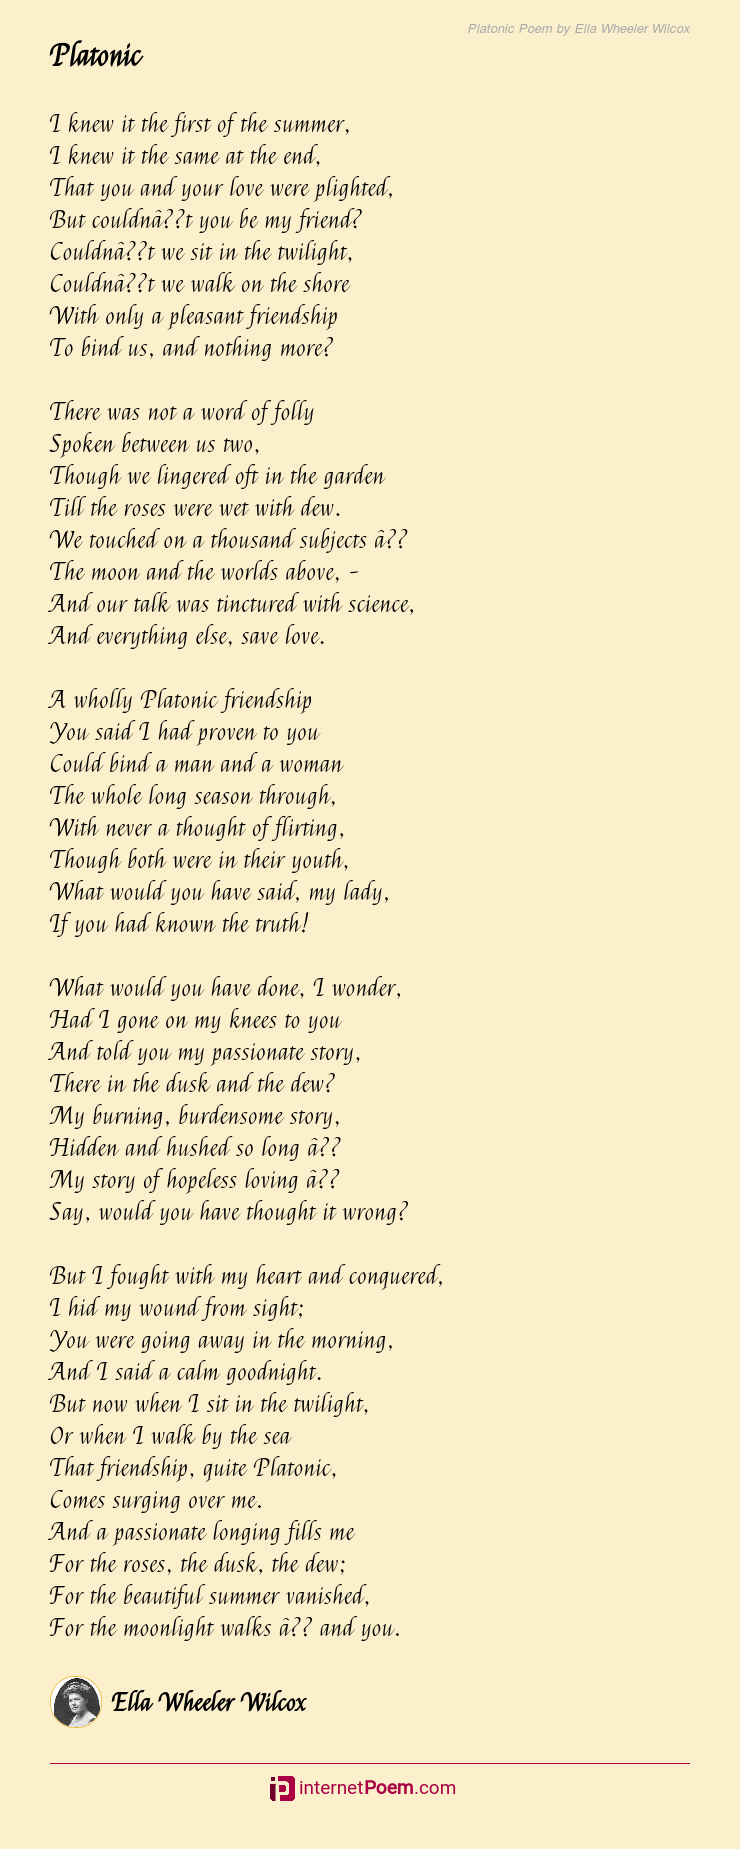 Platonic Poem by Ella Wheeler Wilcox